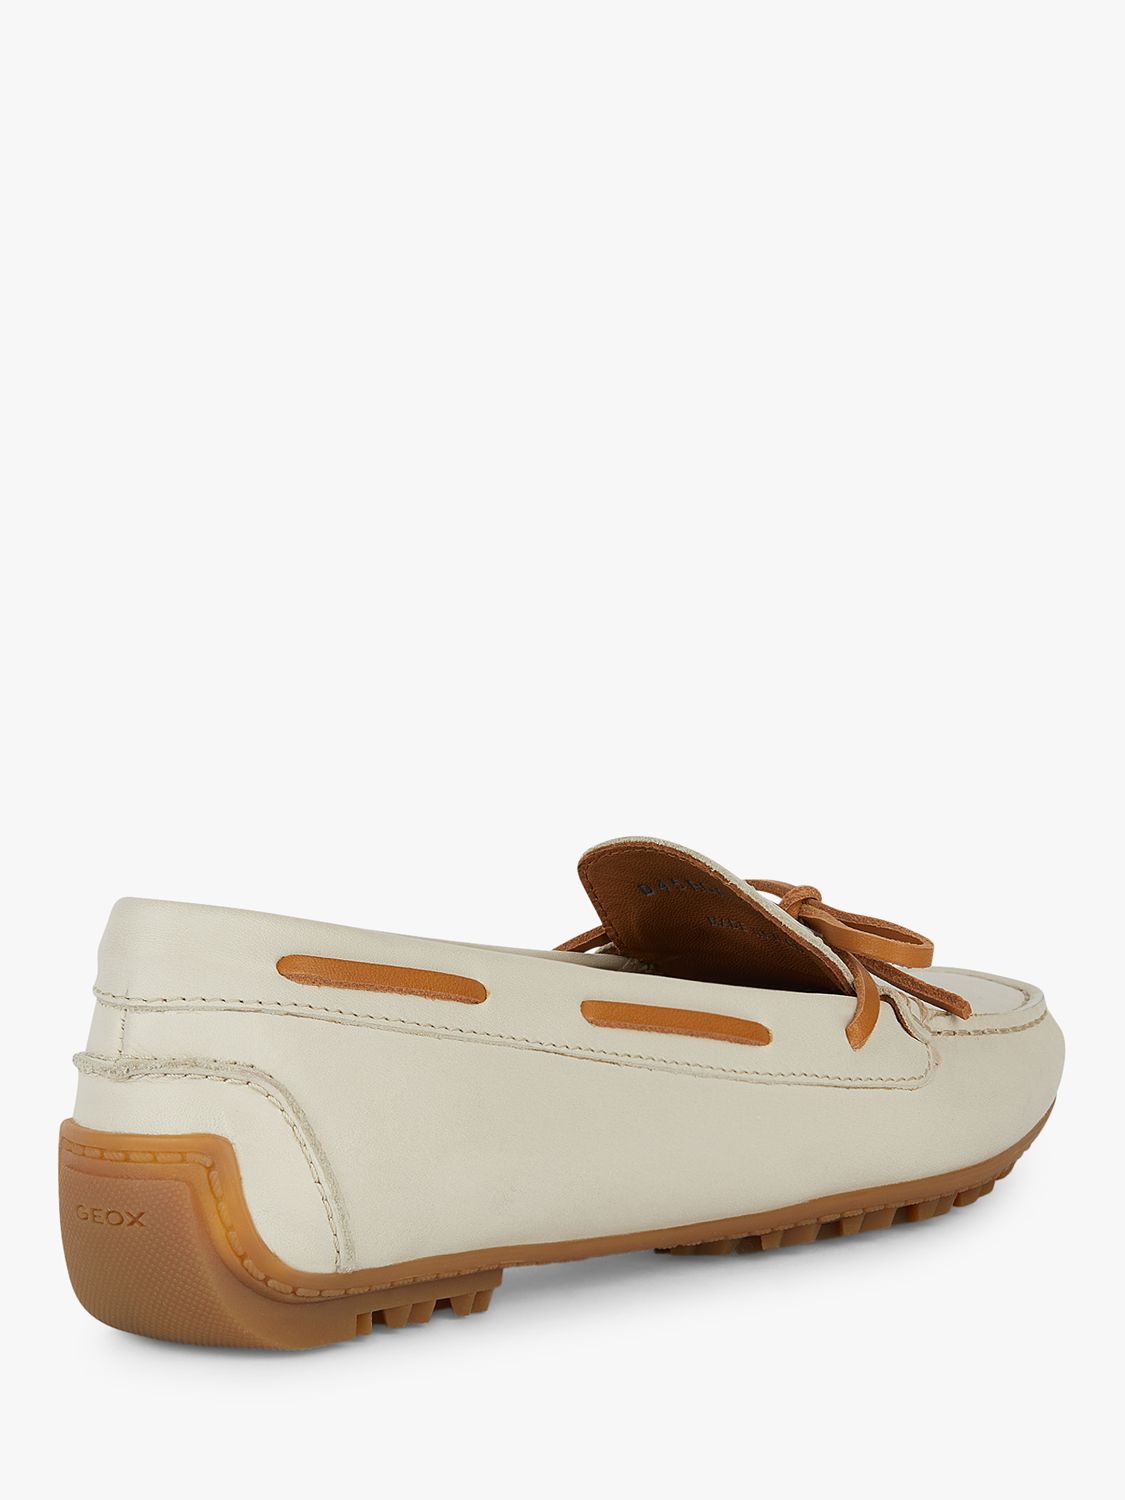 Geox Kosmopolis + Grip Lightweight Leather Loafers, Light Sand/Camel, EU37